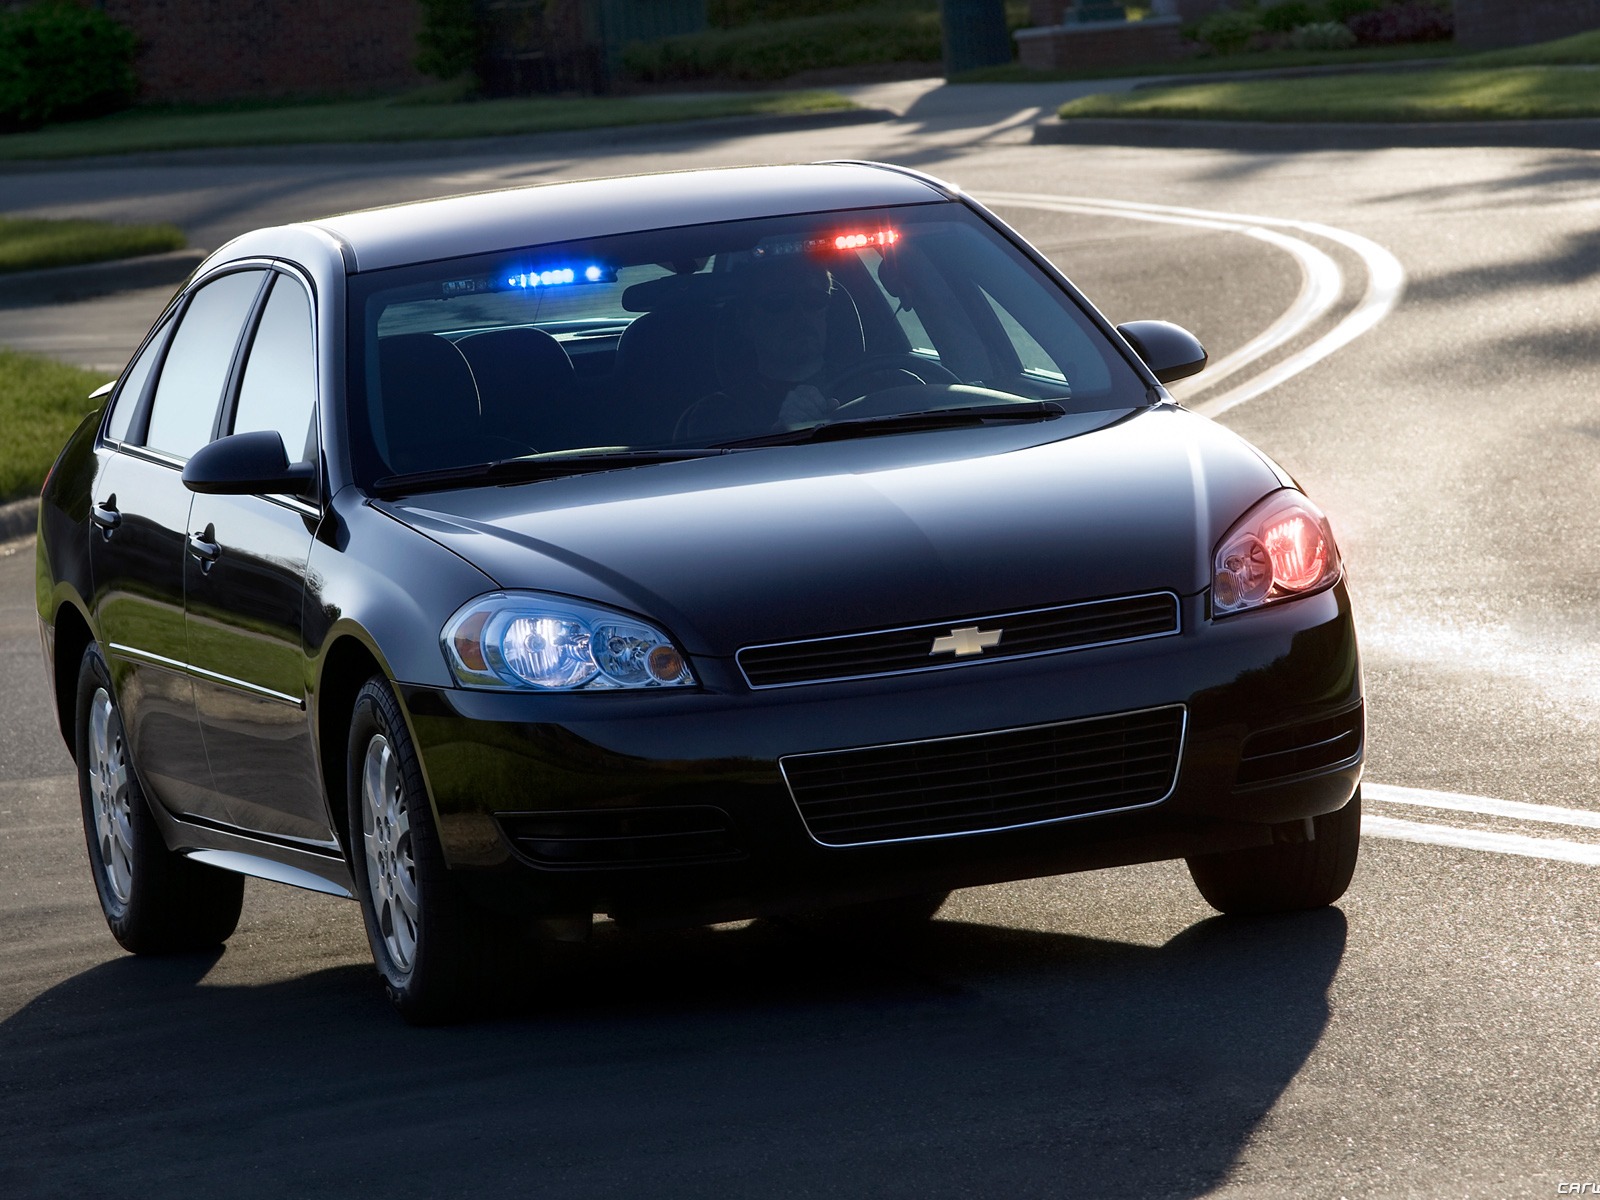 Chevrolet Impala Police Vehicle - 2011 雪佛兰6 - 1600x1200